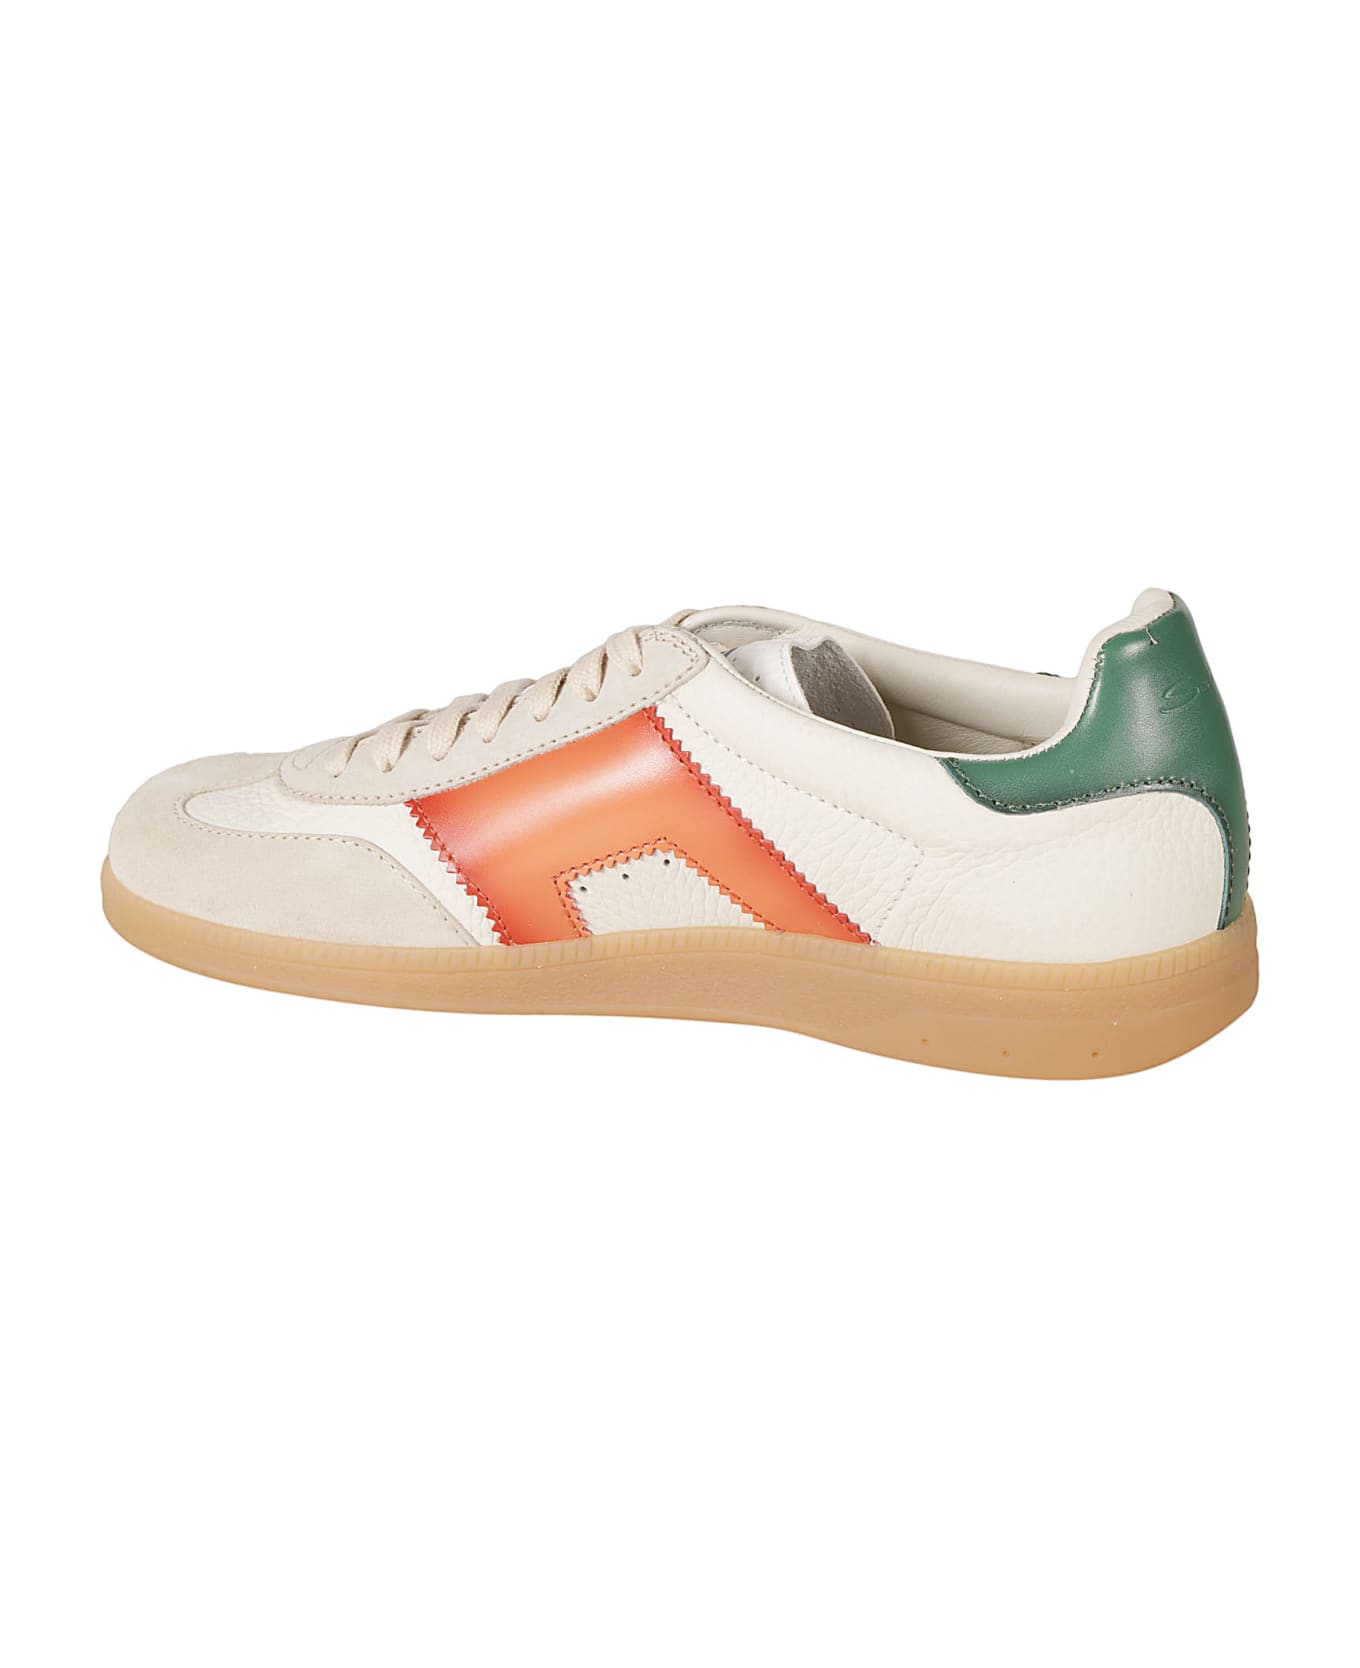 Santoni Evii88 Sneakers - Multicolor